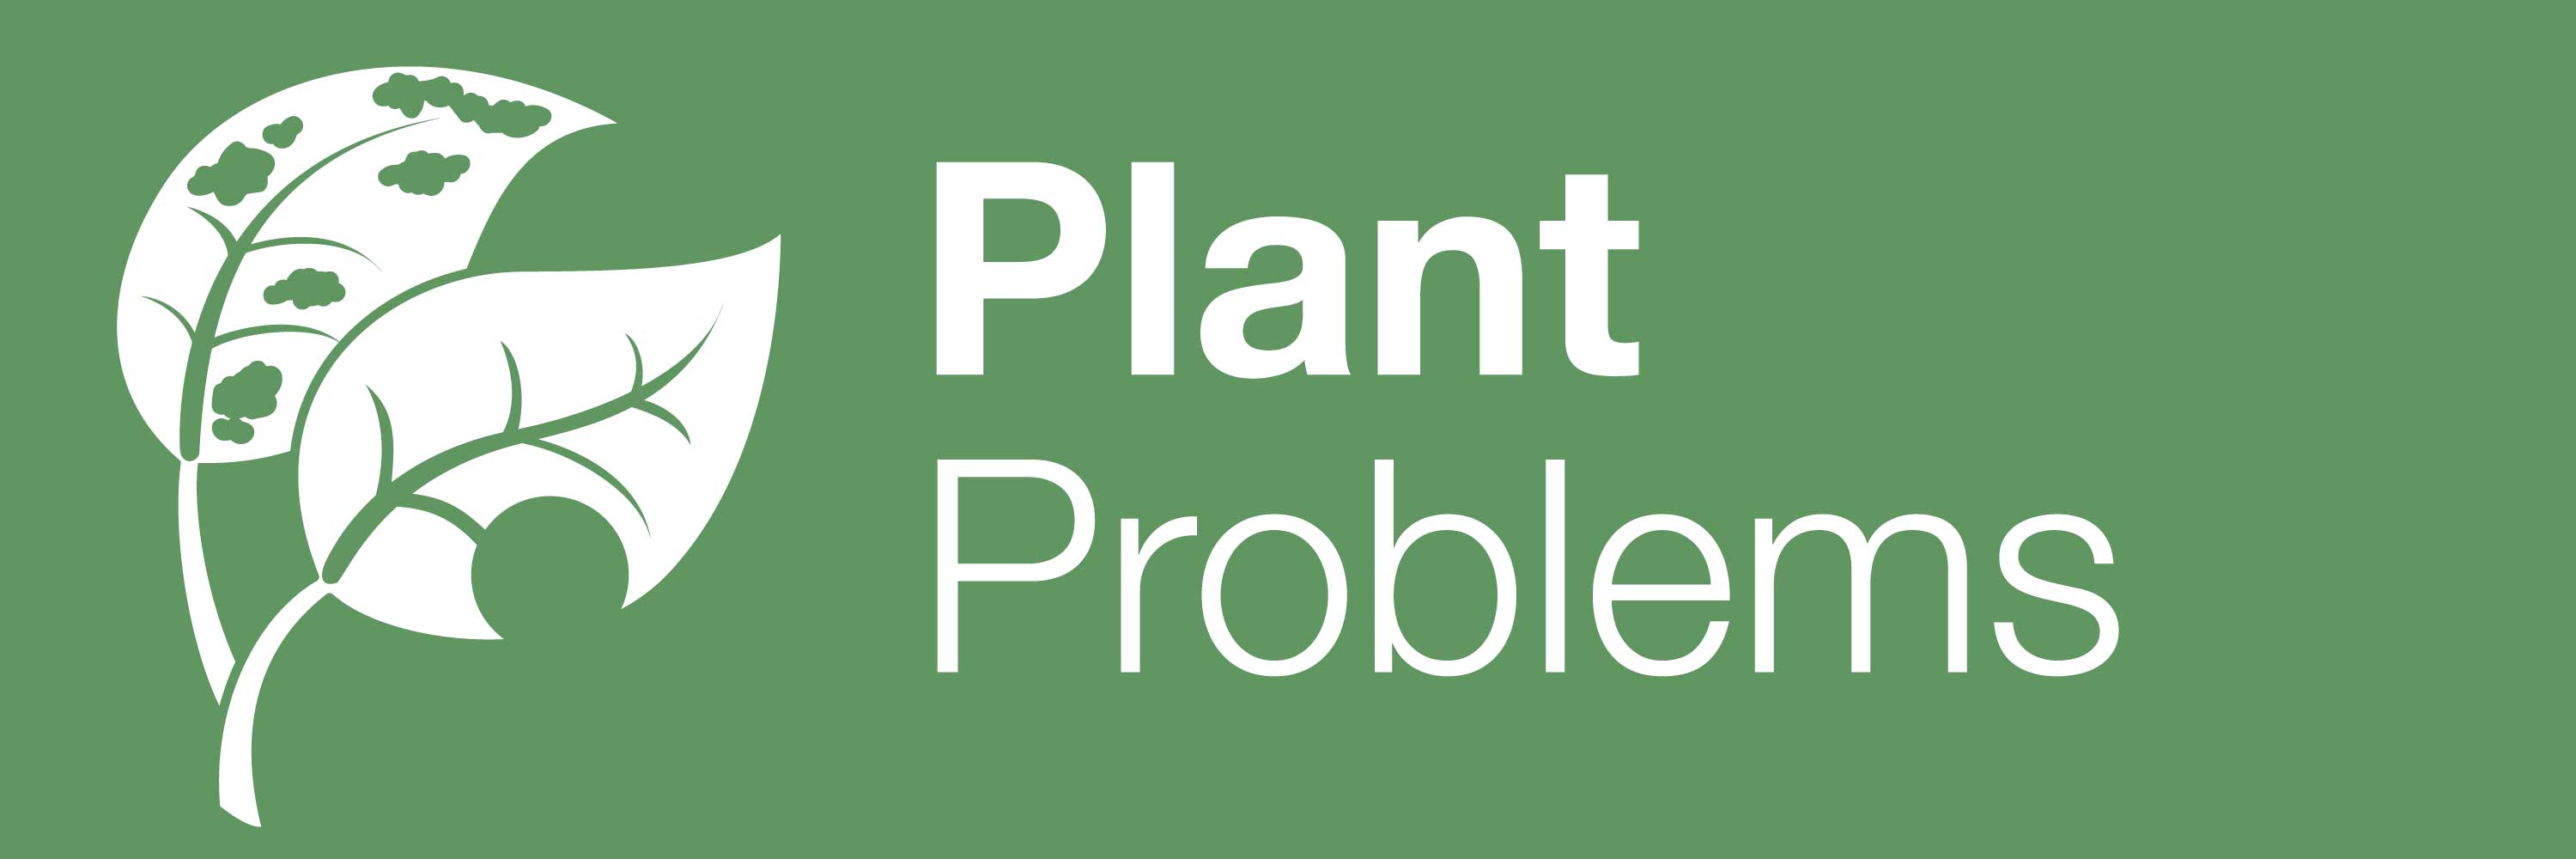 Plant Problems Banner